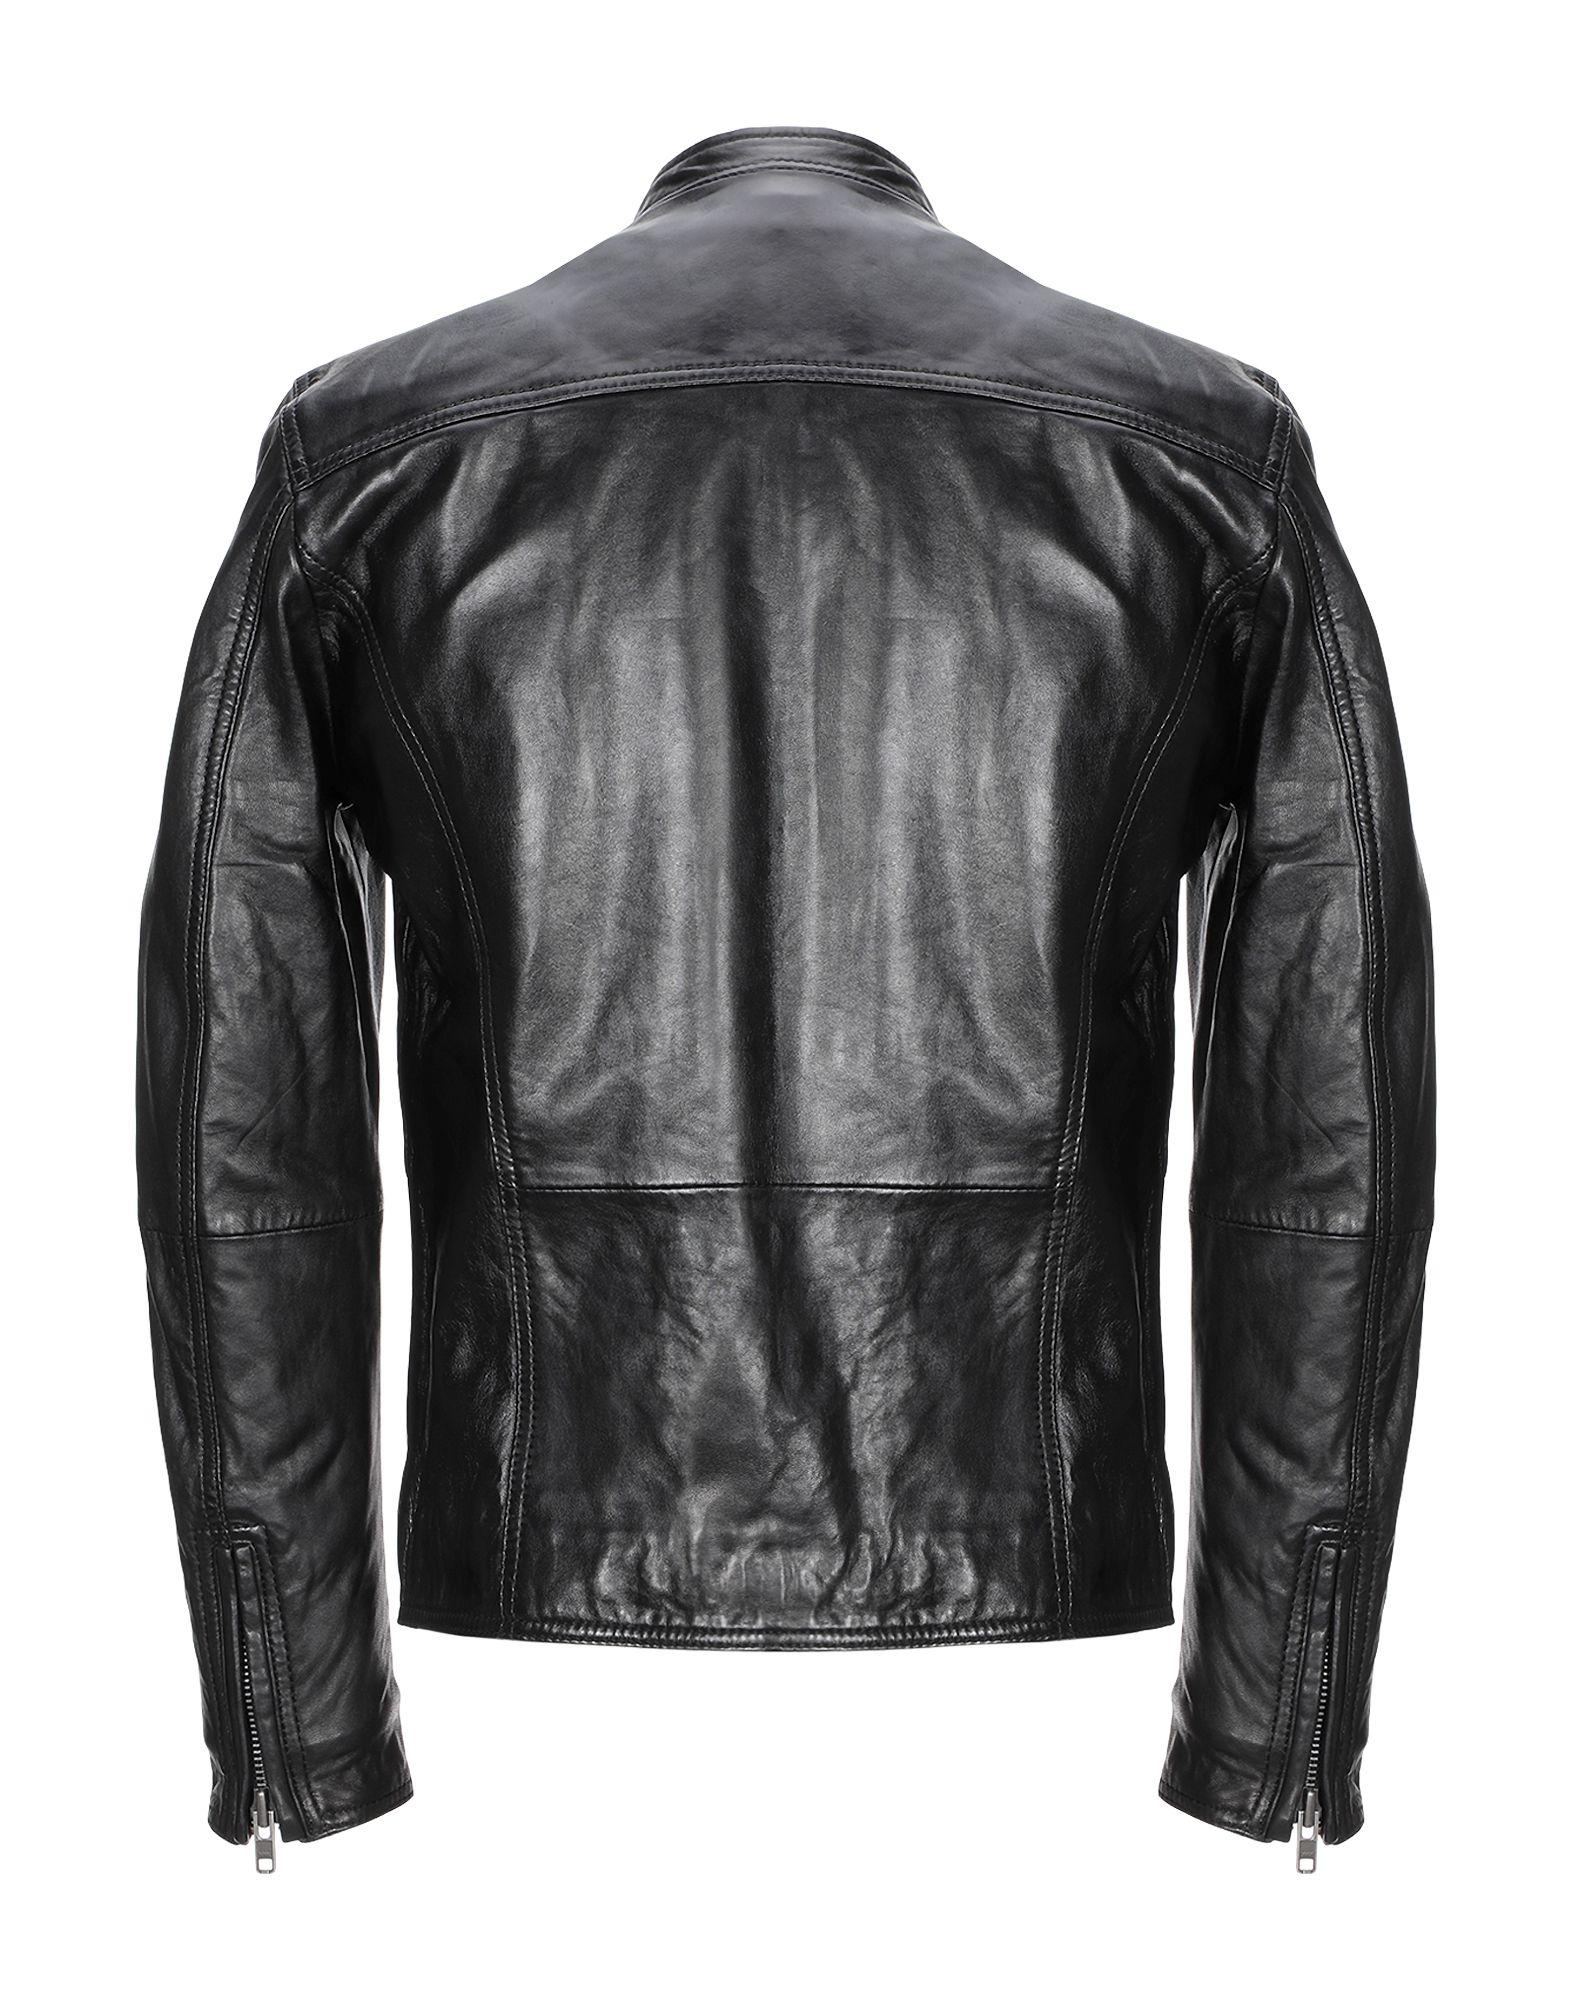 Bomboogie Leather Jacket in Black for Men - Lyst